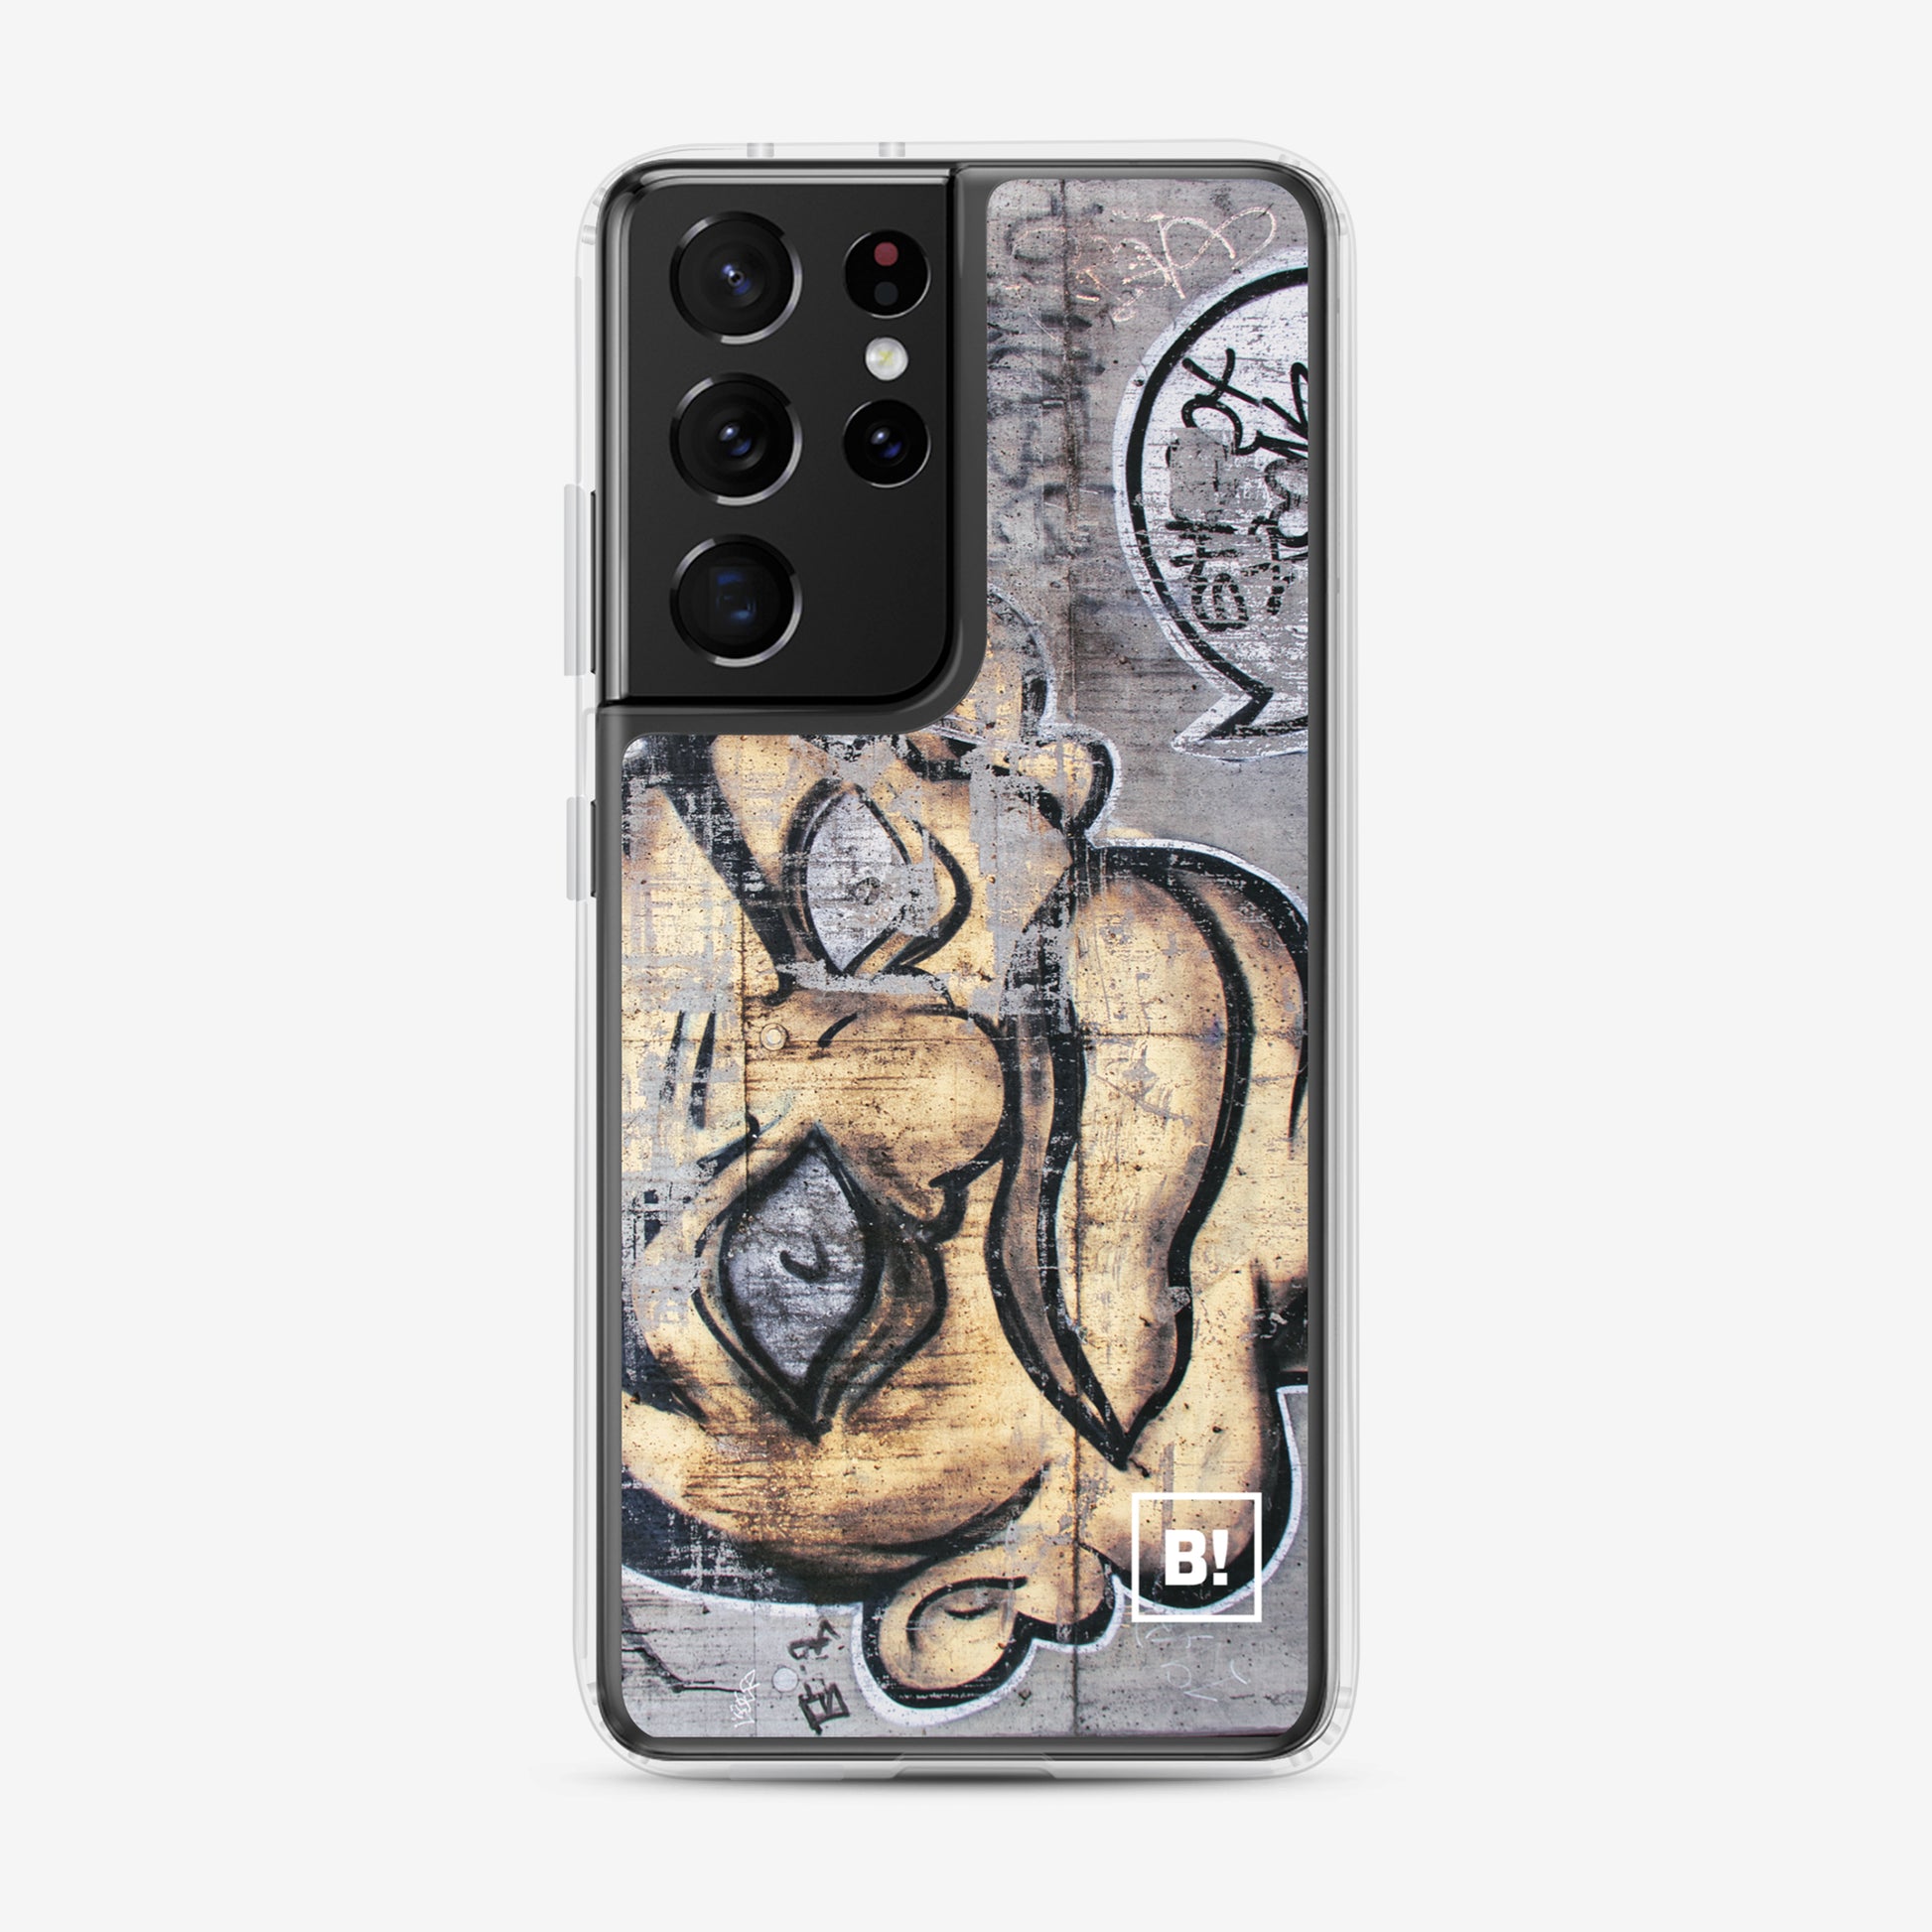 Binspired Shoot Urban Art Samsung Galaxy s21 Ultra Case